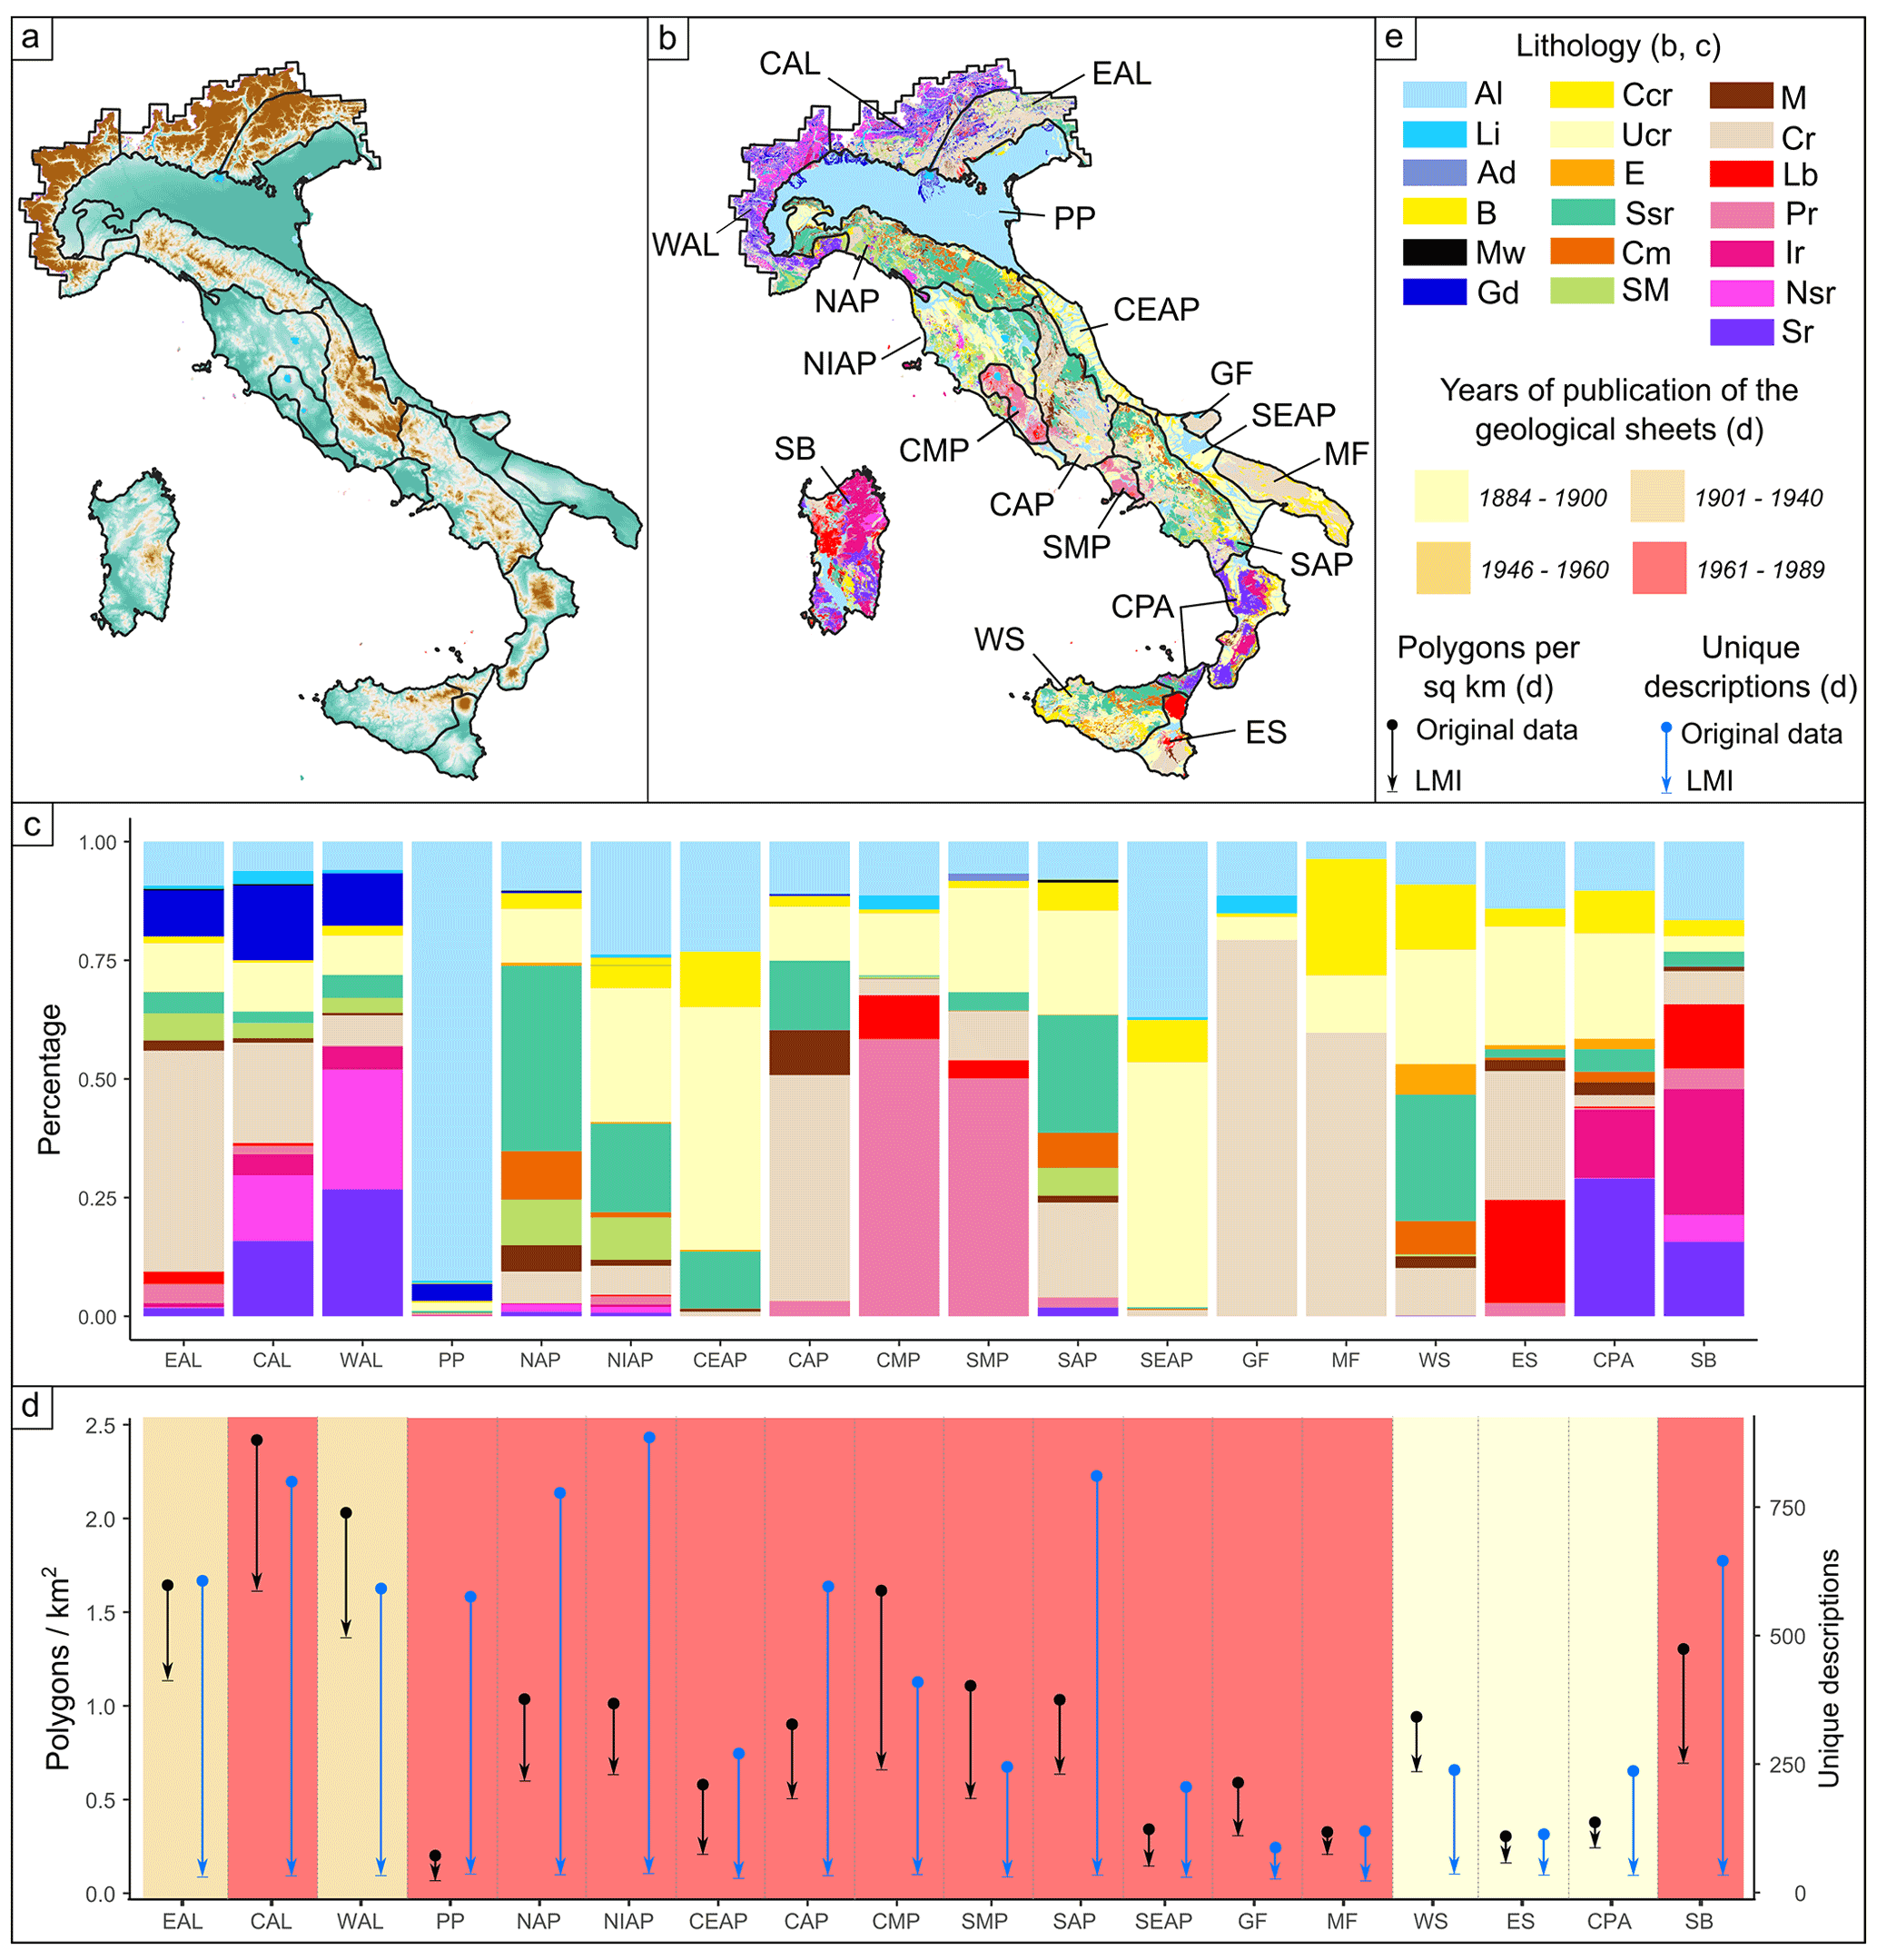 OC] Geologic map of Italy : r/dataisbeautiful